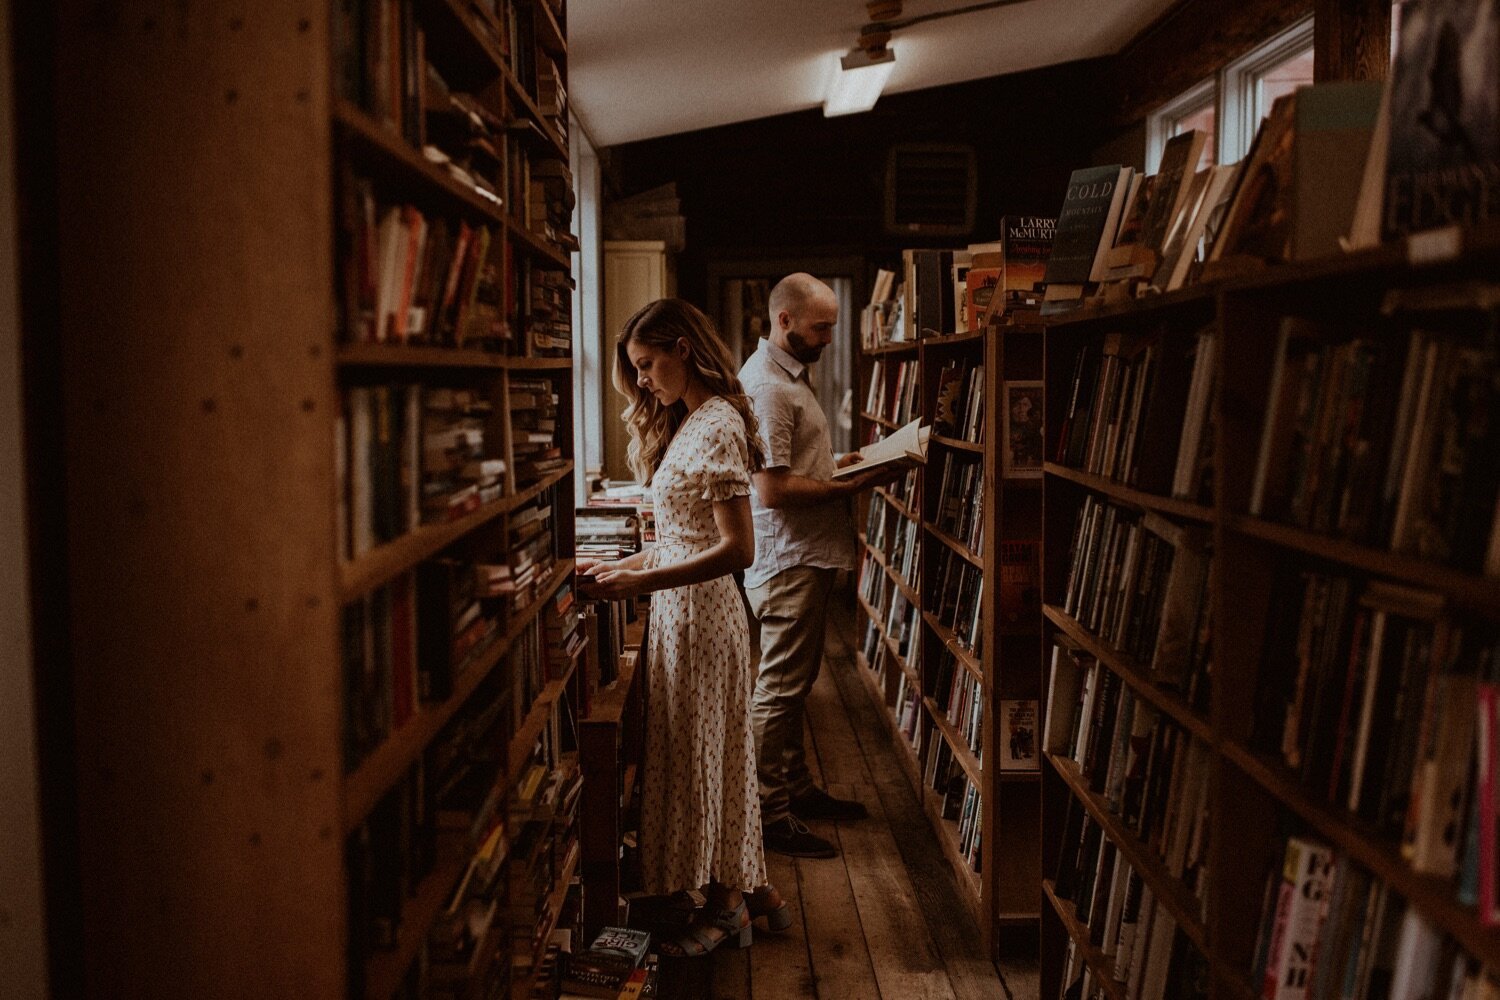 60-montague-ma-romantic-book-vinyl-store-engagement-session-boston-photographer.jpg